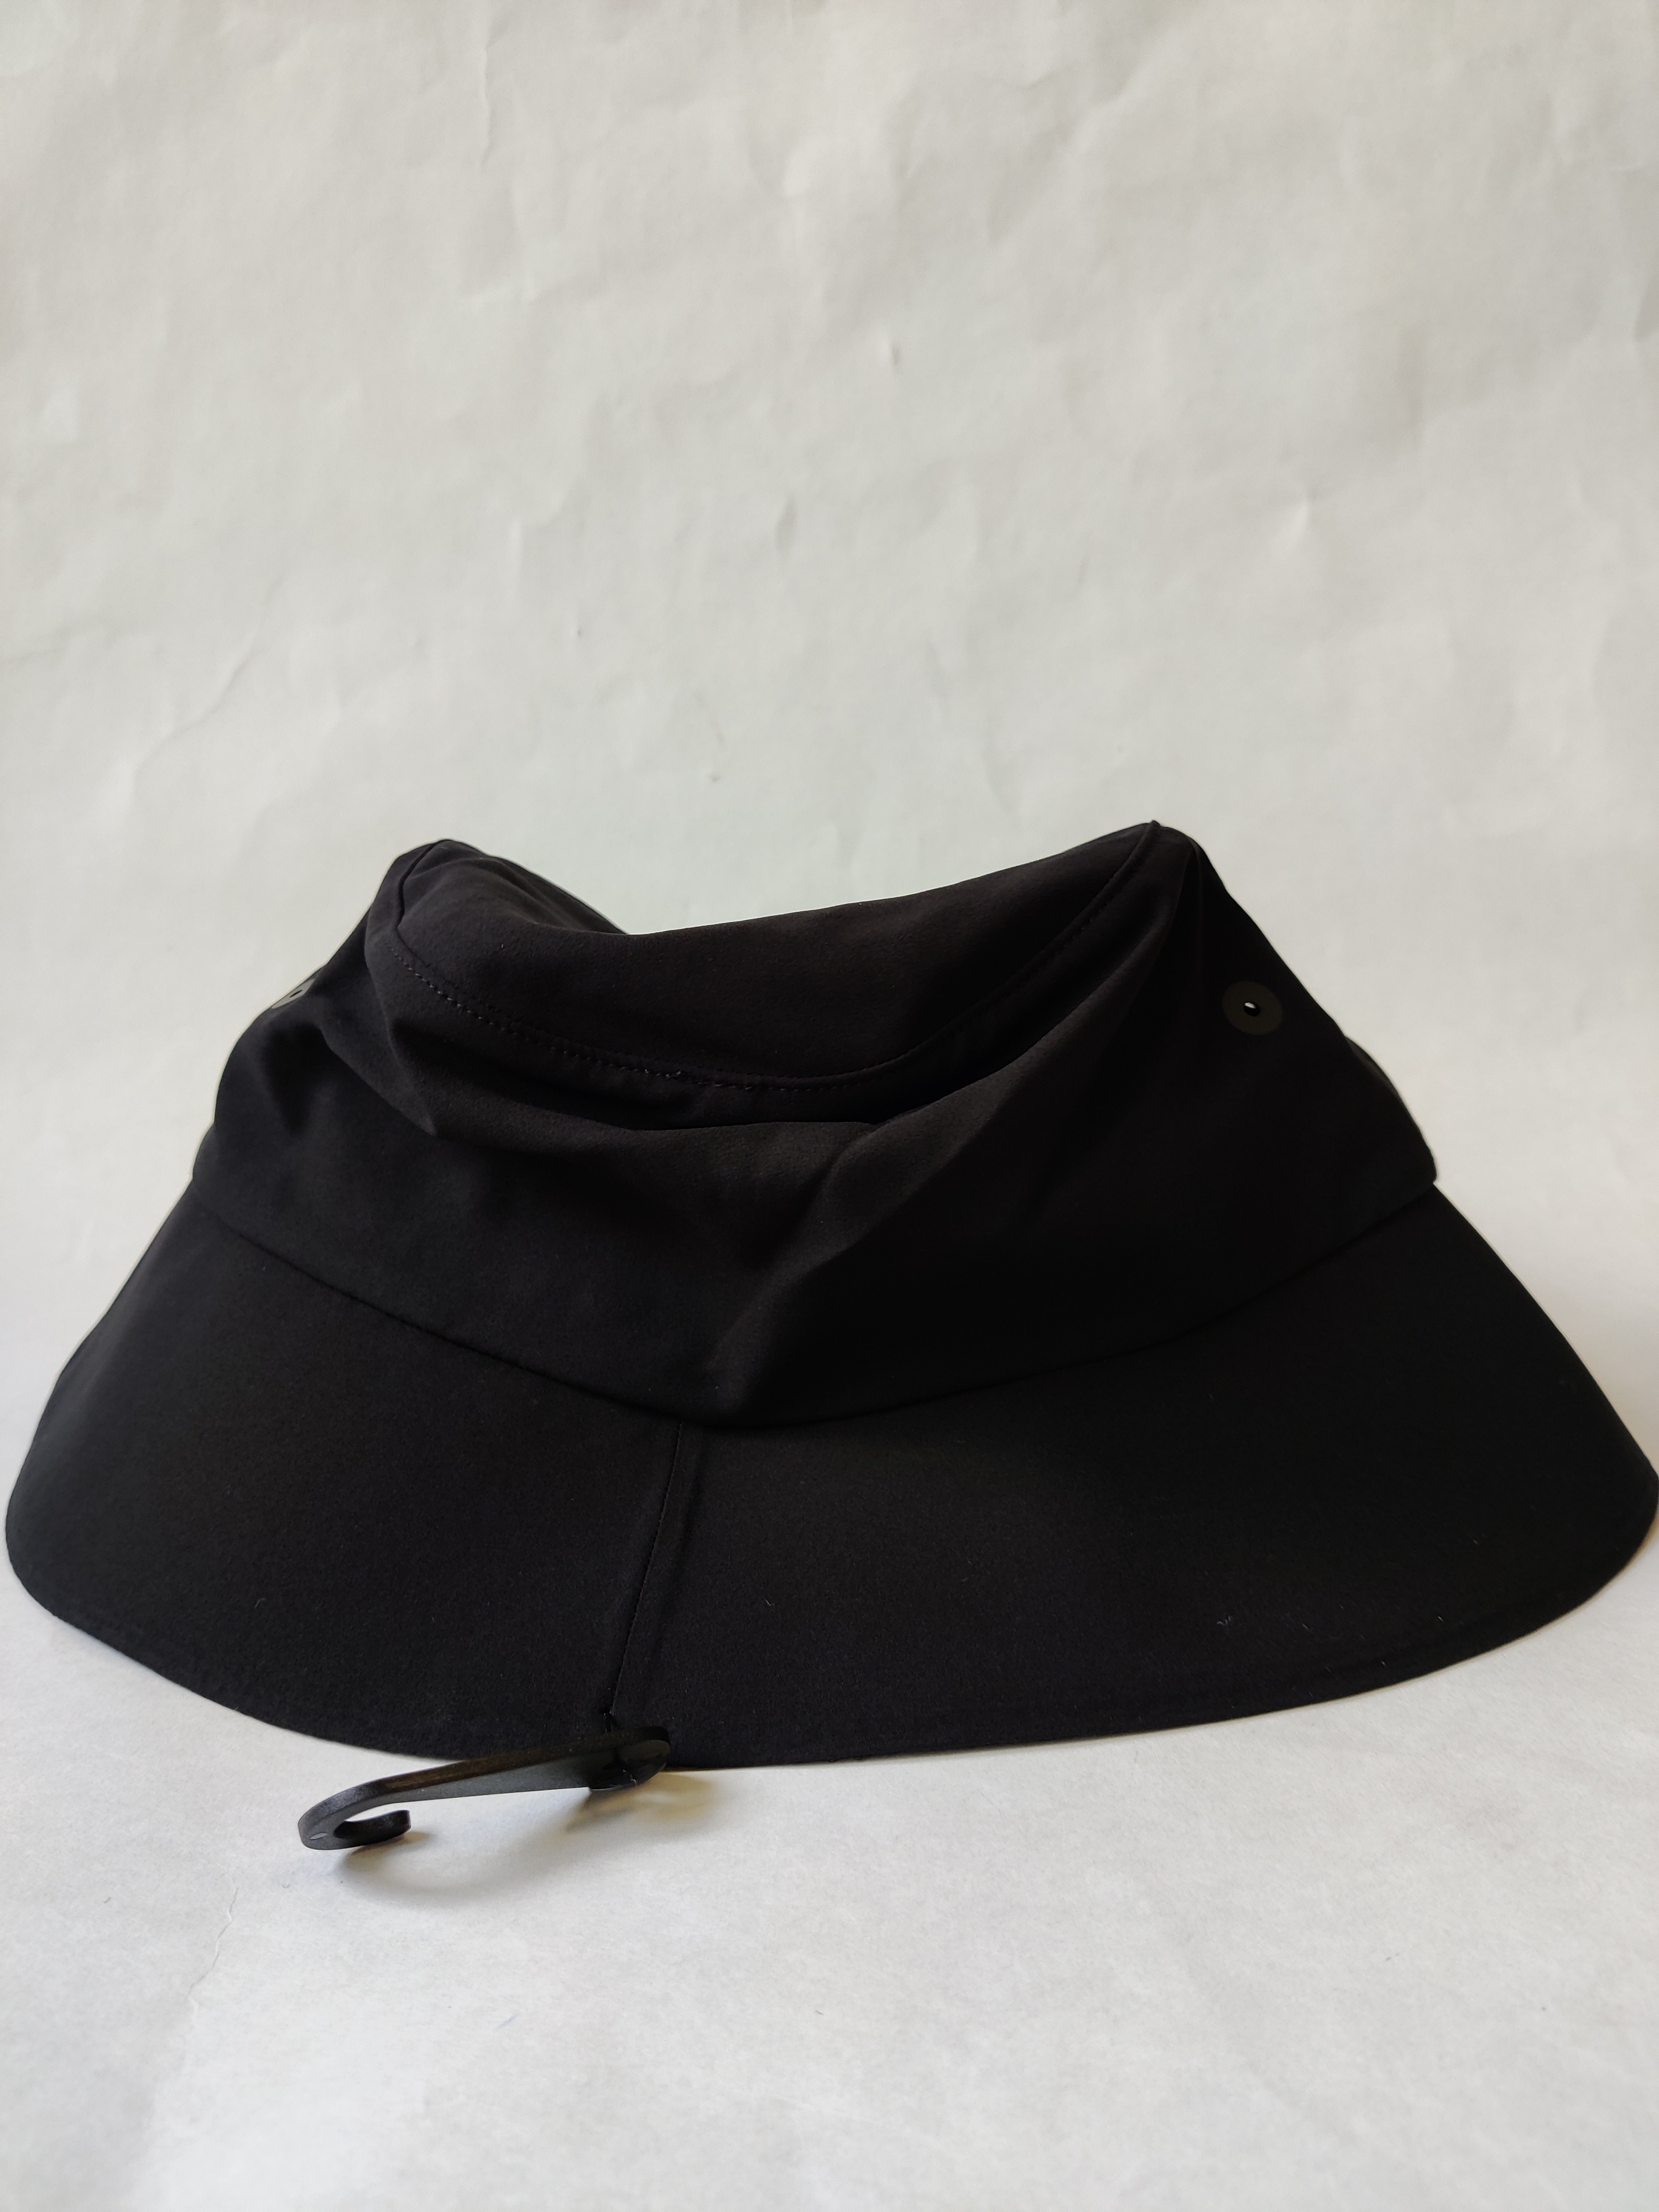 Sinsolo Bucket Hat Size S/M Sun Cap Summer Black Travel Beach Outdoor Men UPF 50+ - 4